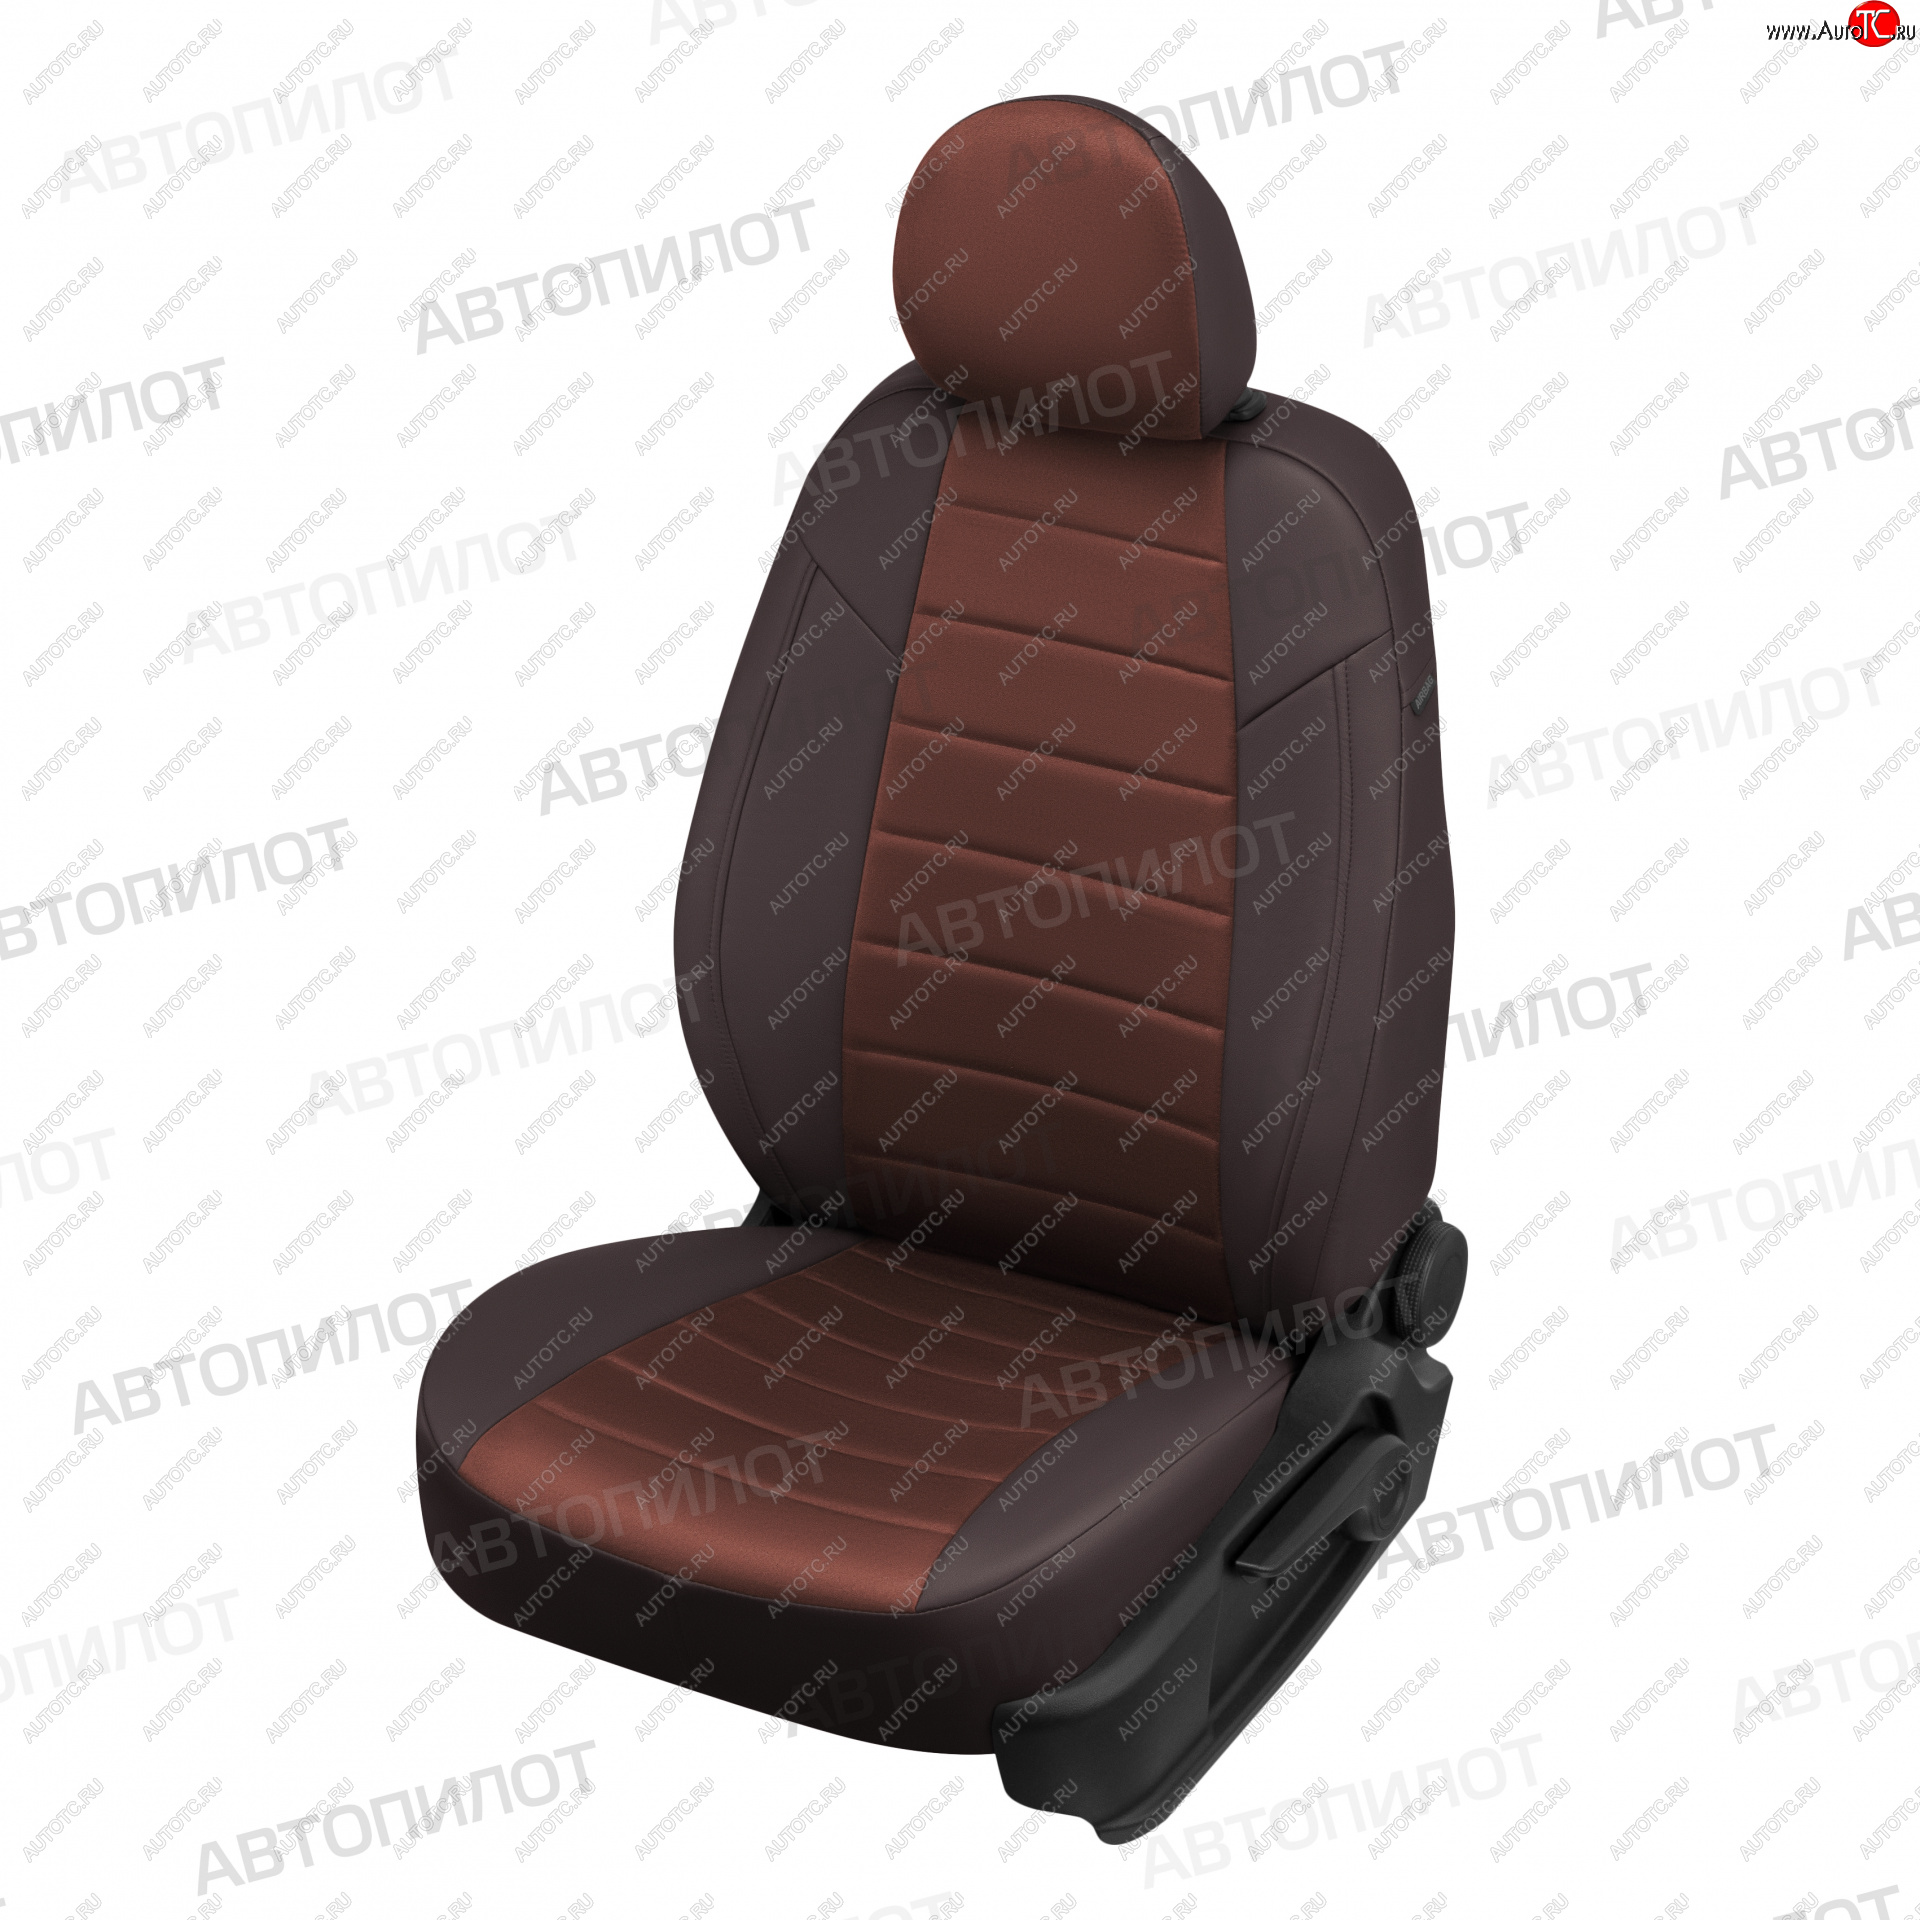 13 449 р. Чехлы сидений (экокожа/алькантара) Автопилот  Ford Fiesta  5 (2001-2008) (шоколад)